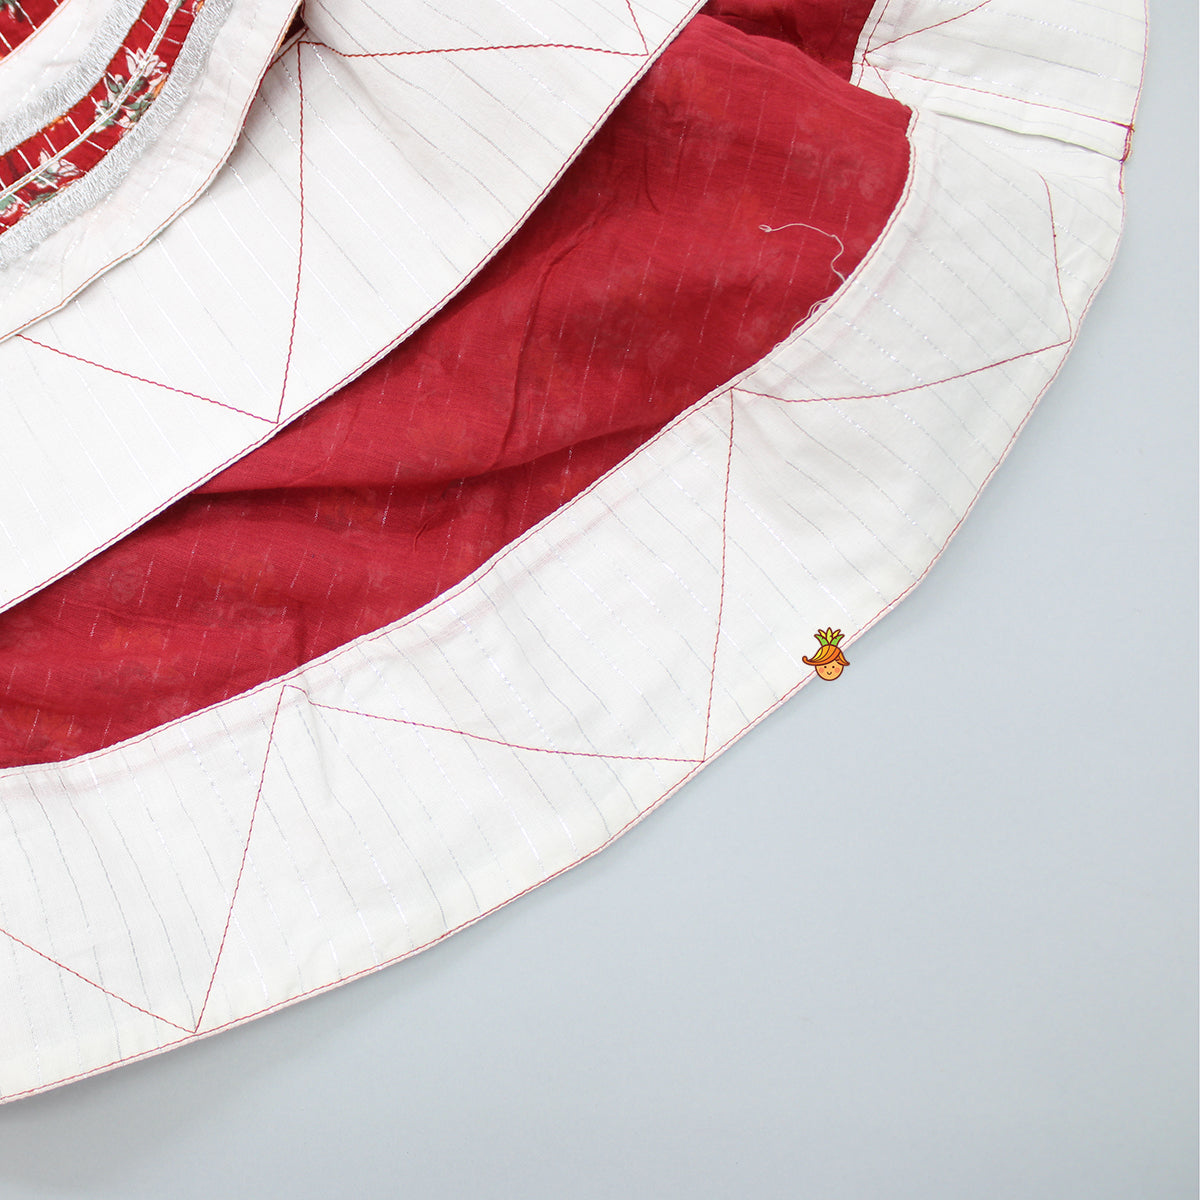 Halter Neck Red Cotton Top And Layered Hem Lehenga With Lurex Striped White Dupatta